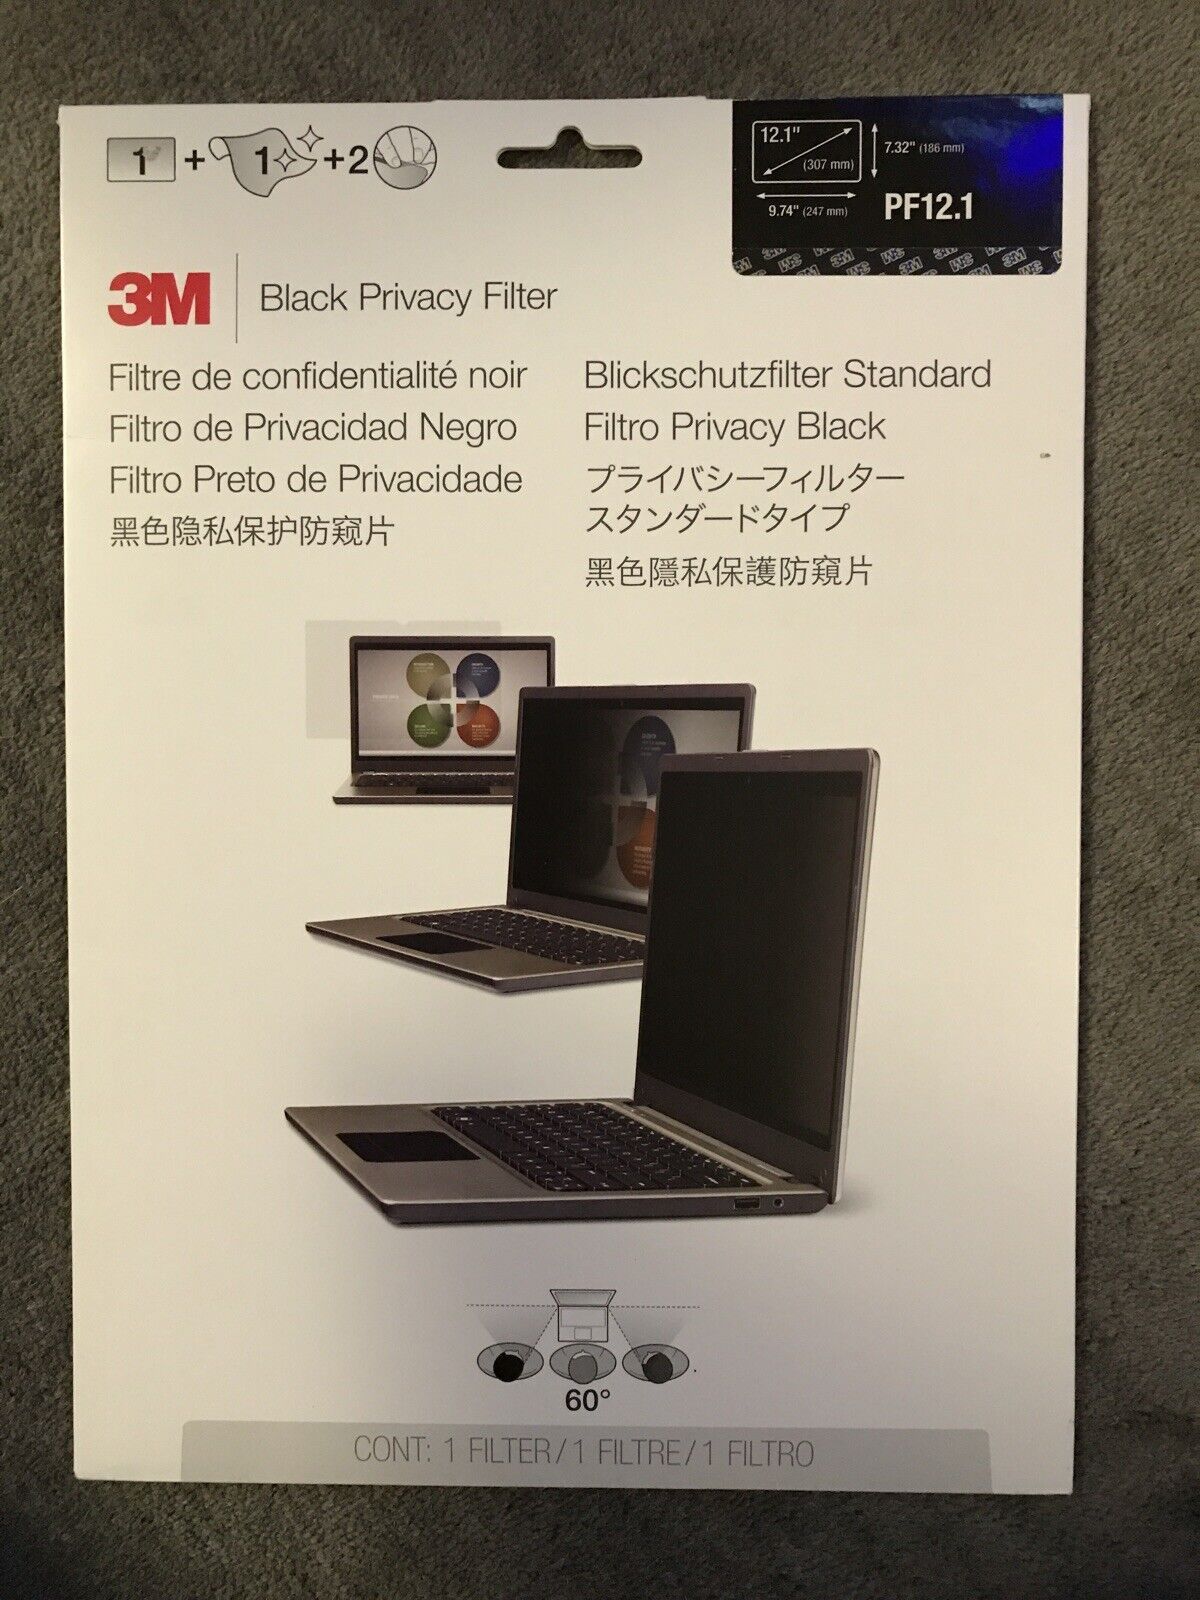 New 3M Black Privacy Filter PF12.1